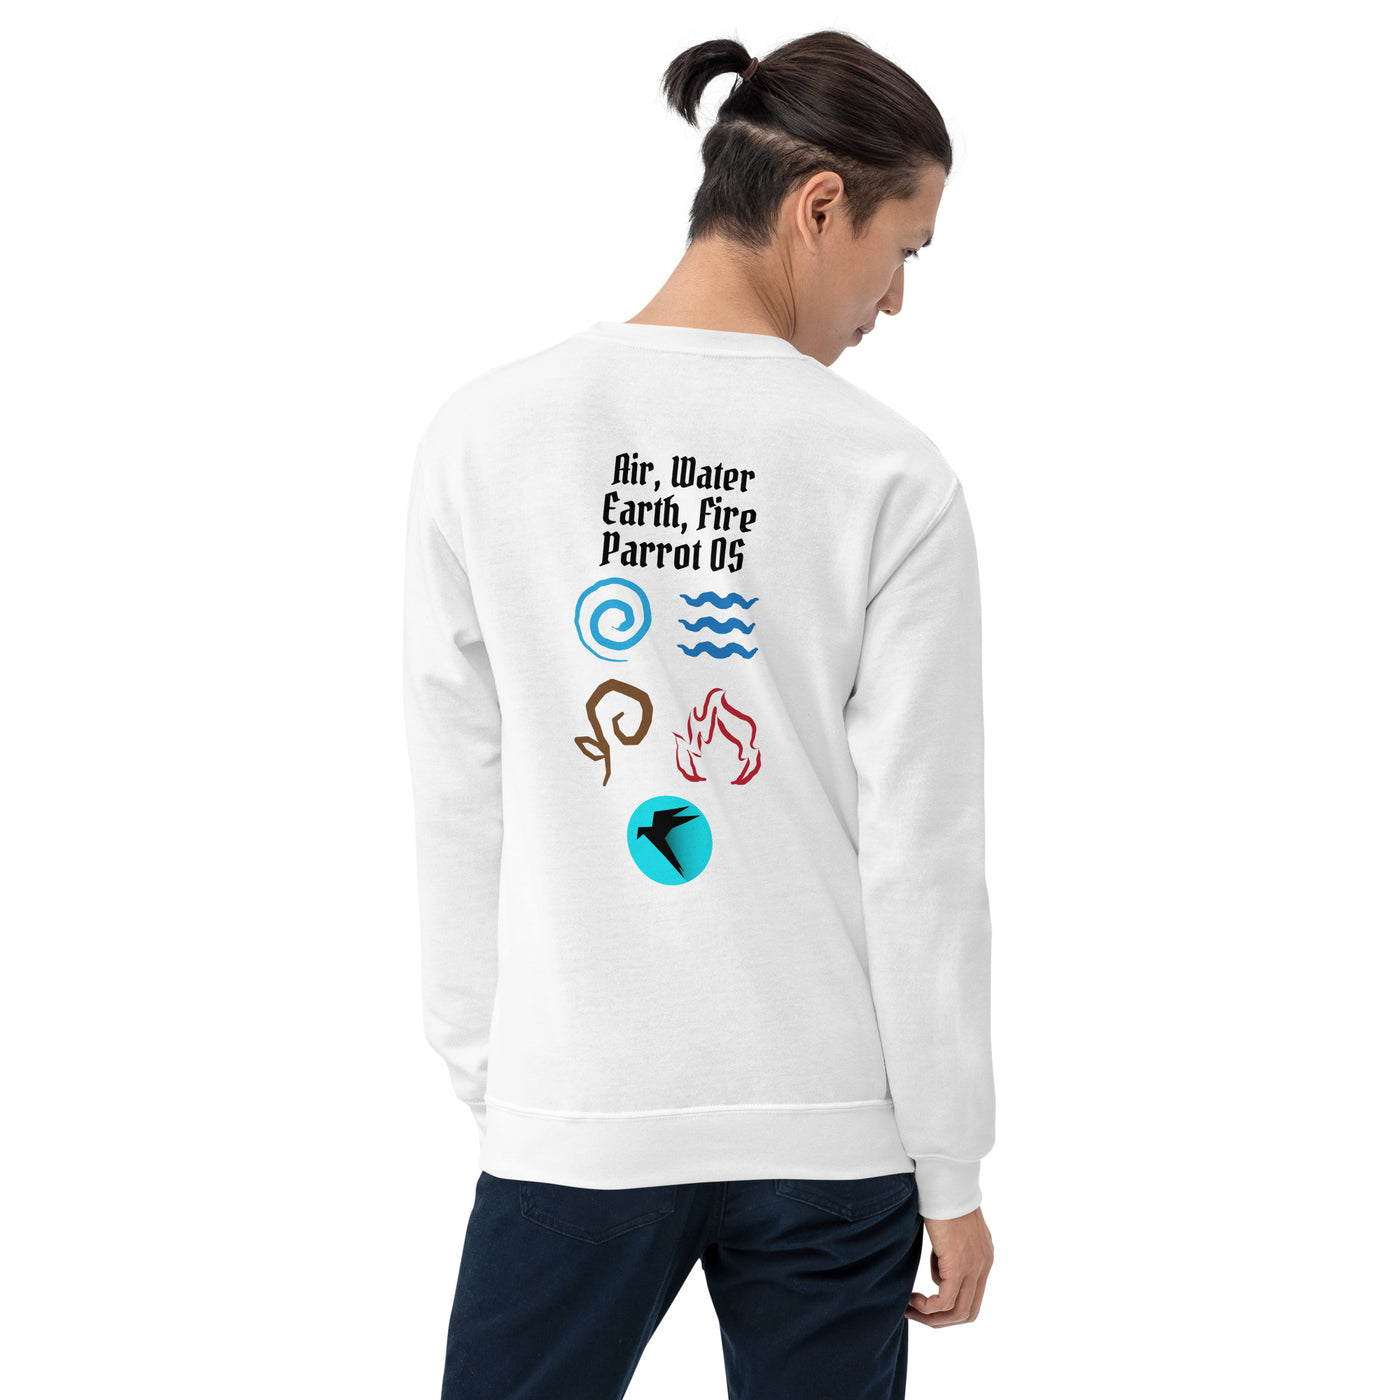 Air, Water, Earth, Fire, Parrot OS - Unisex Sweatshirt ( Back Print )